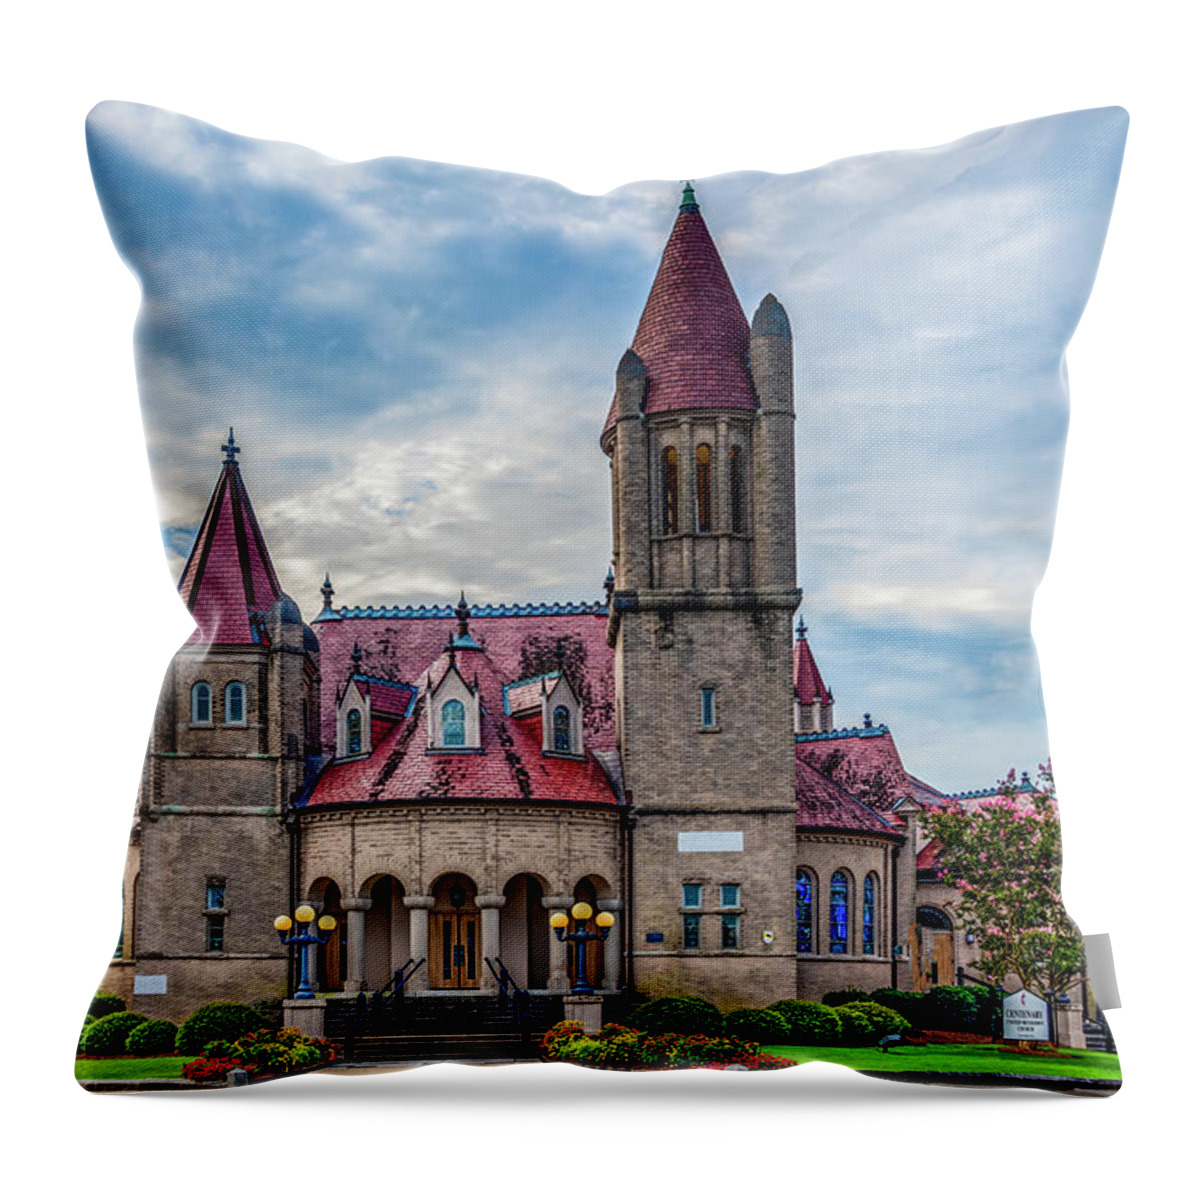  Throw Pillow featuring the photograph Centenary United Methodist Church of New Bern, North Carolina by Marcy Wielfaert